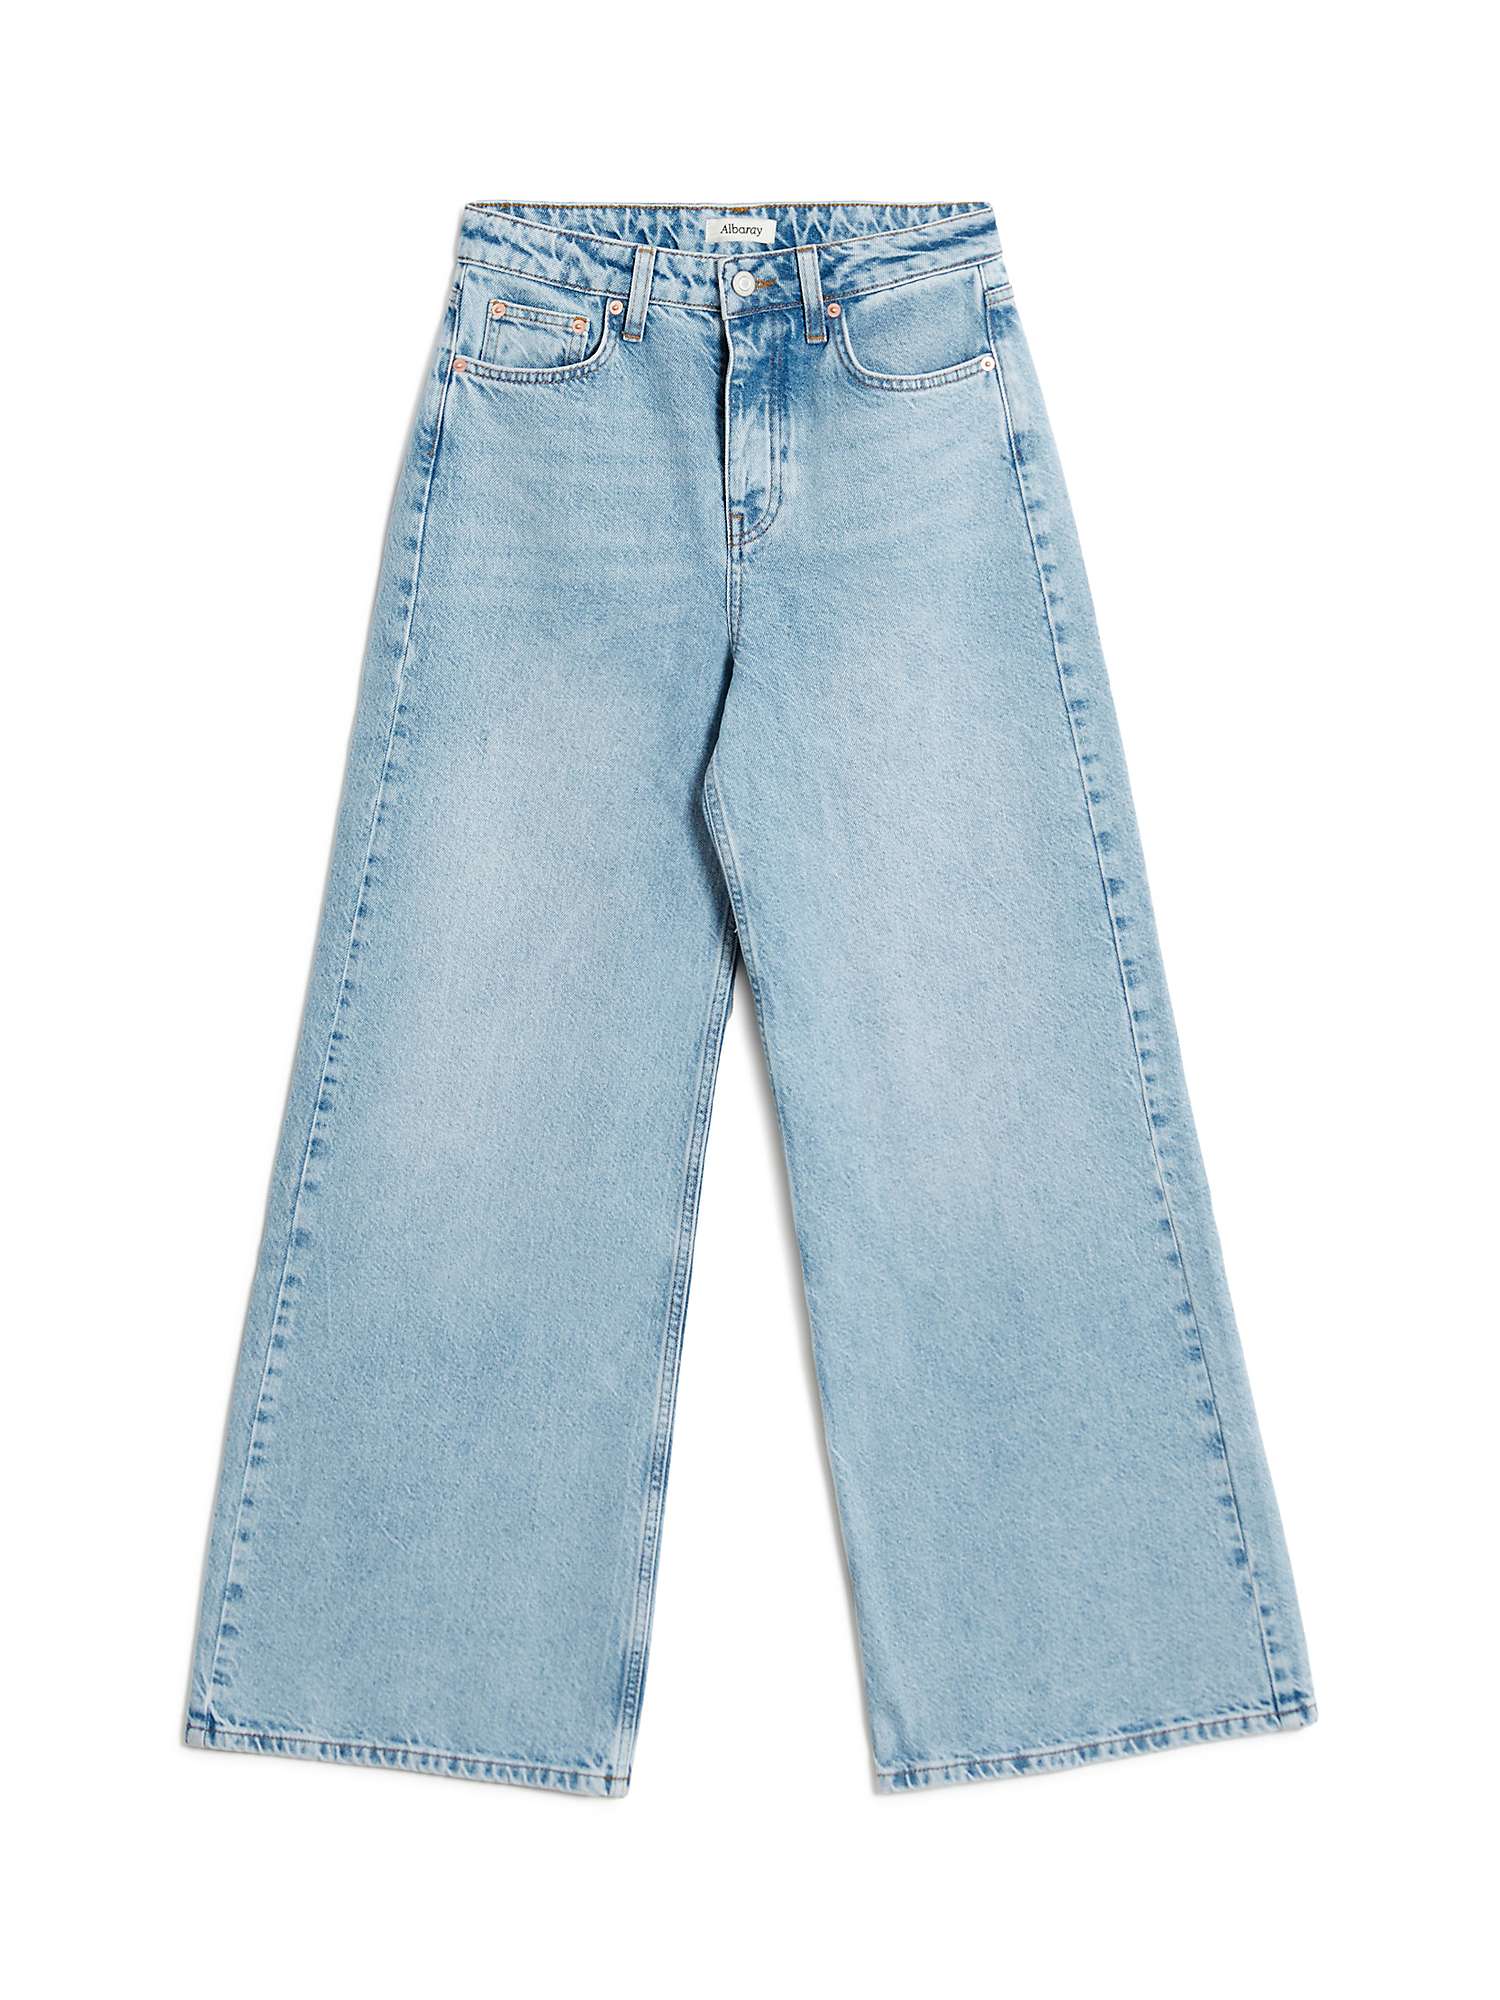 Buy Albaray Organic Cotton Wide Leg Jeans, Light Wash Online at johnlewis.com